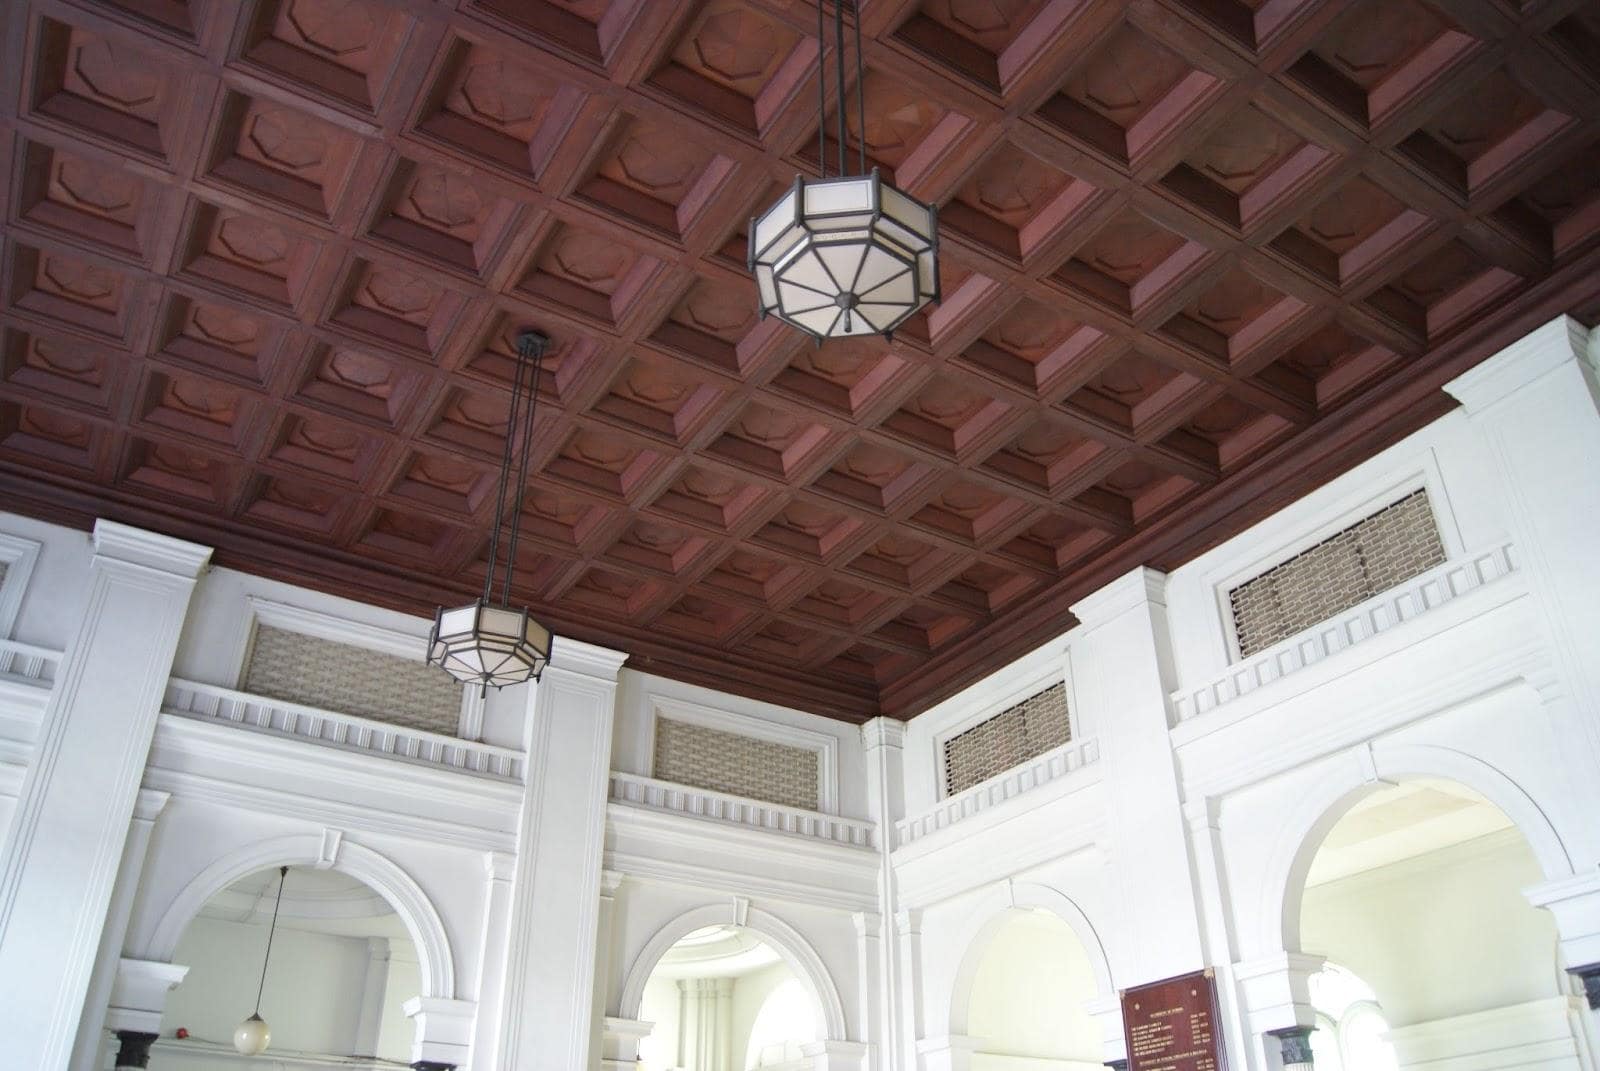 National Gallery Singapore secrets revealed - chocolate ceiling